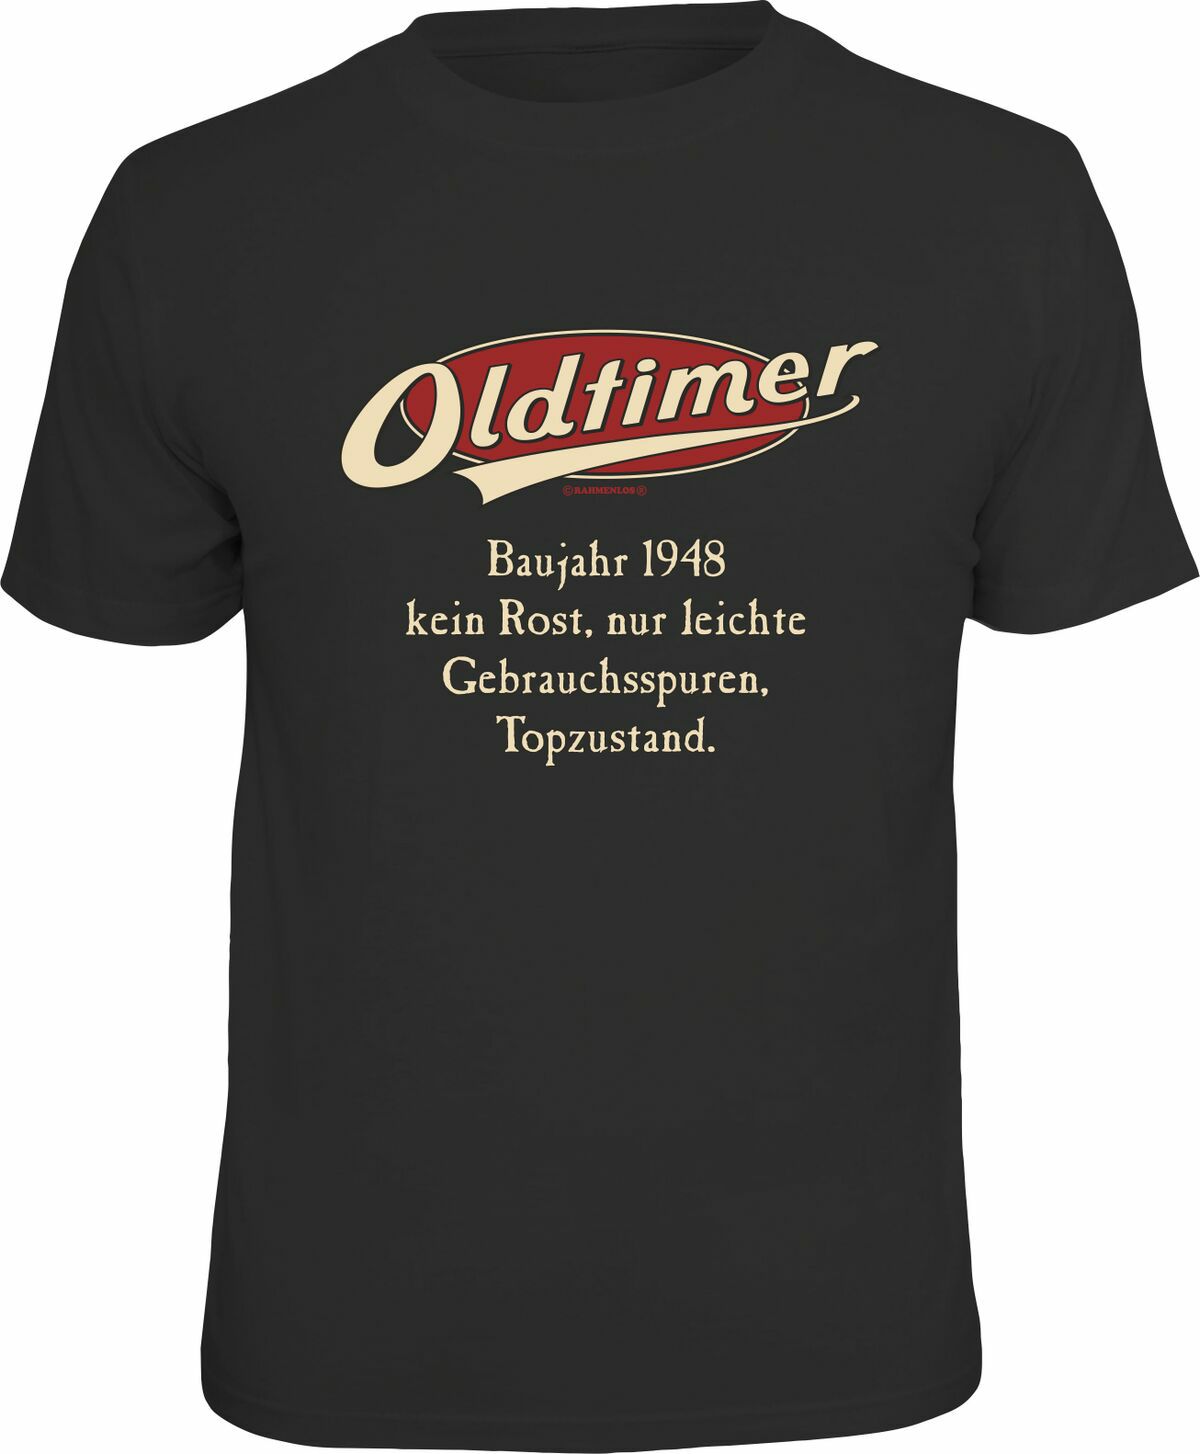 T-Shirt Oldtimer 1948 M